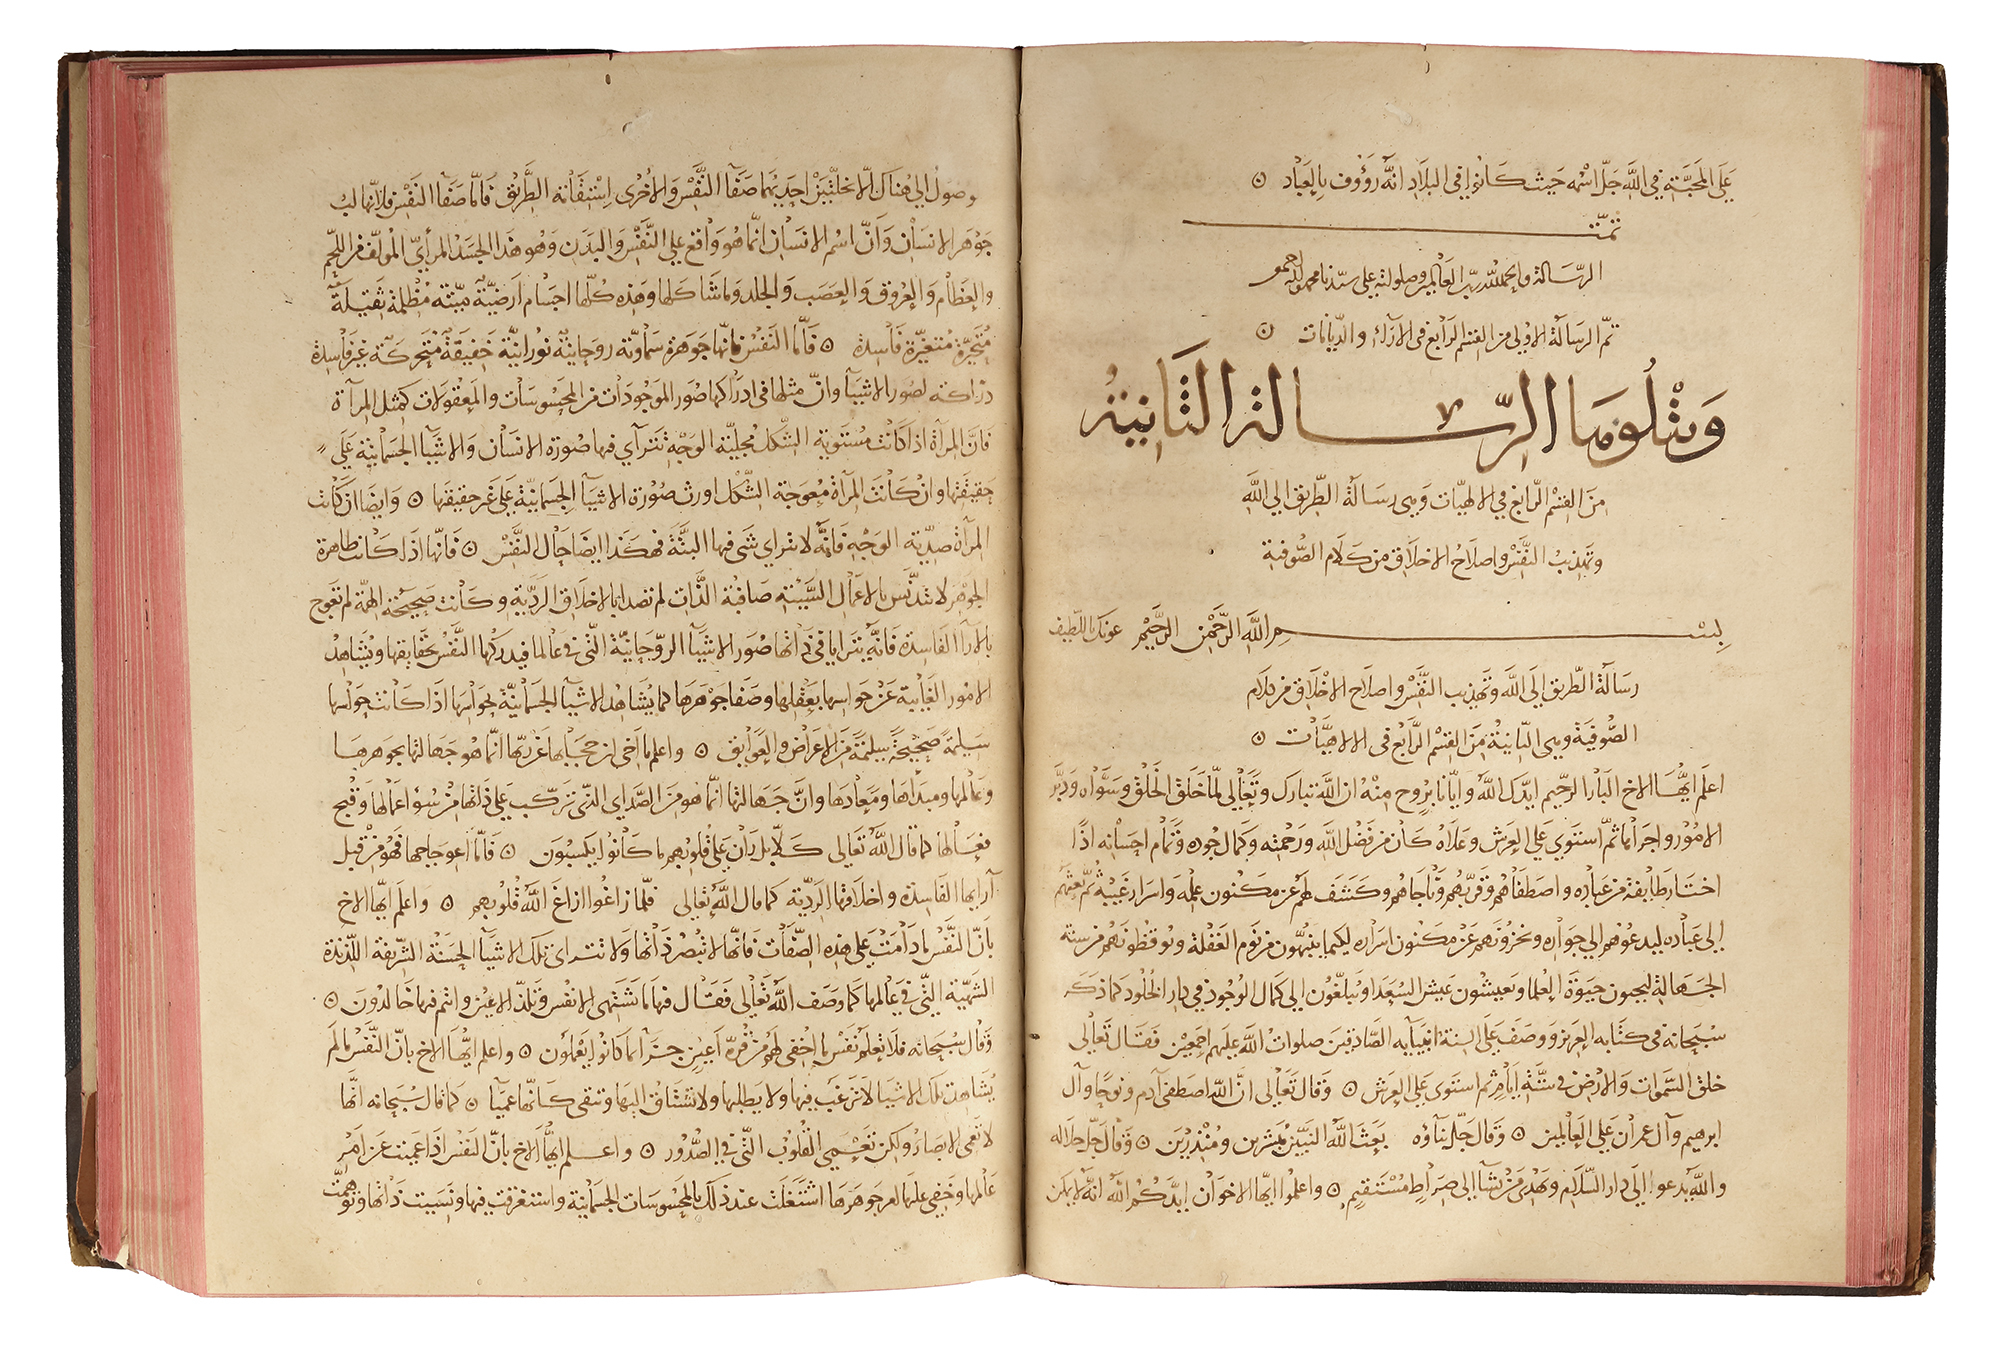 RASA'IL IKHWAN AL-SAFA, SIGNED BY MUHAMMAD IBN 'UMAR IBN MUHAMMAD AL-KHAZAN AL TASRI, DATED 683 AH/1